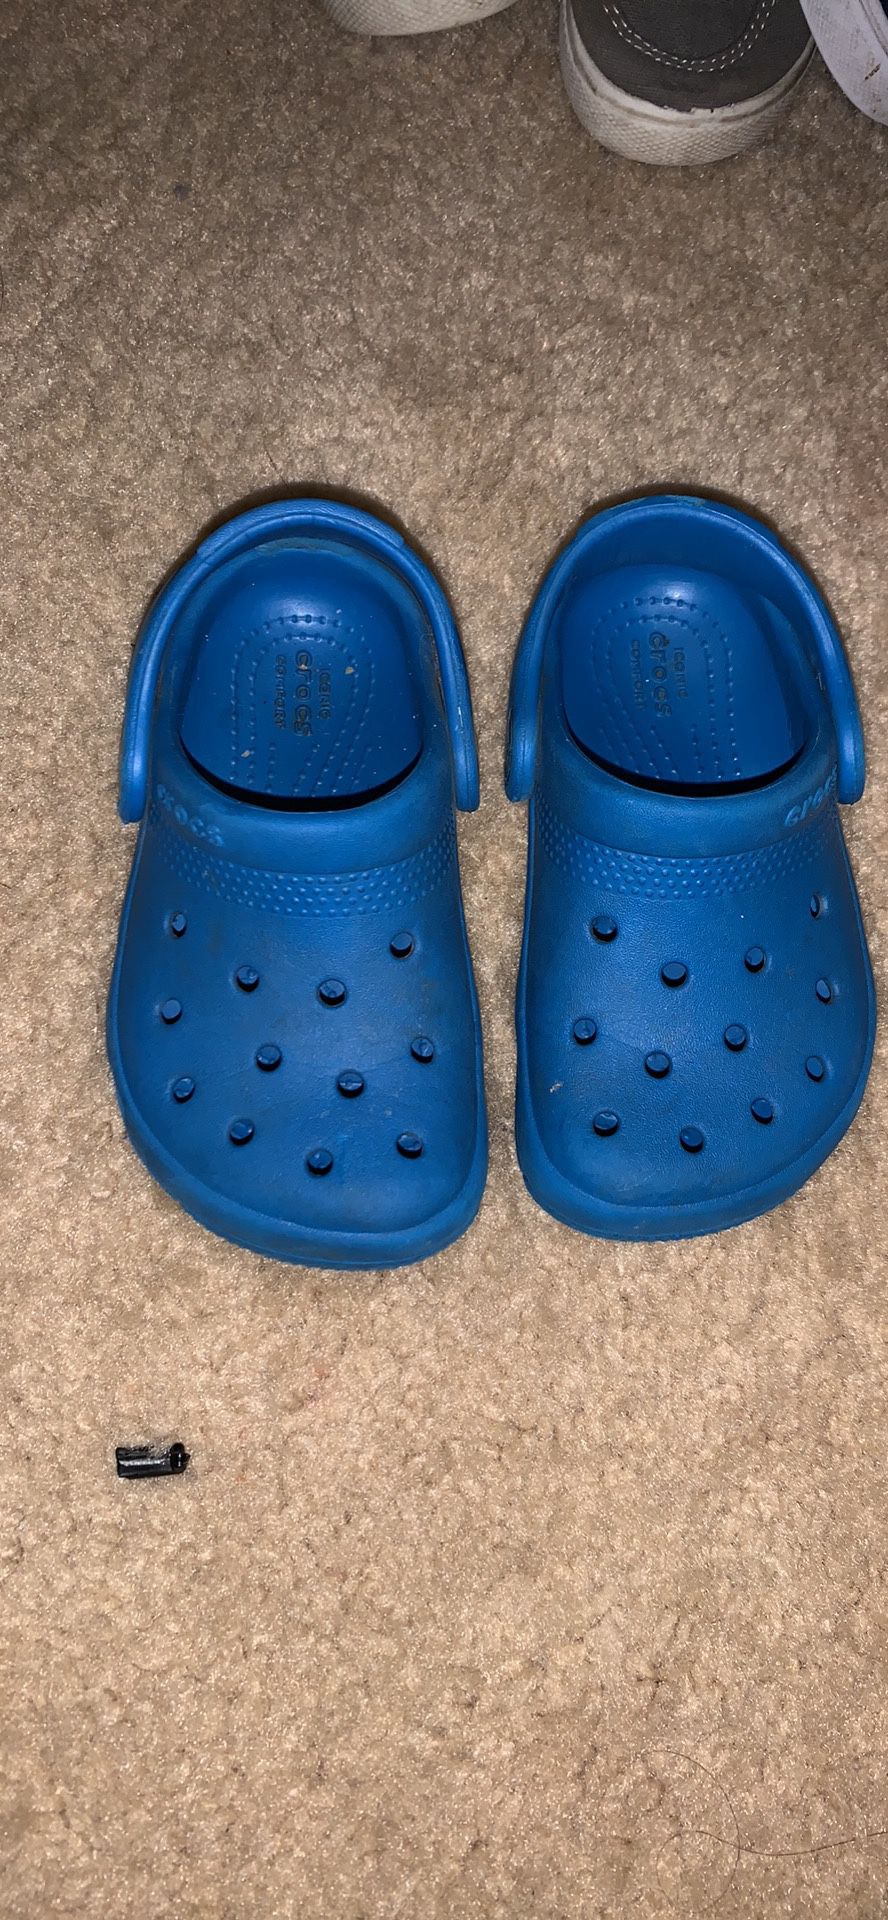 Size 7 crocs